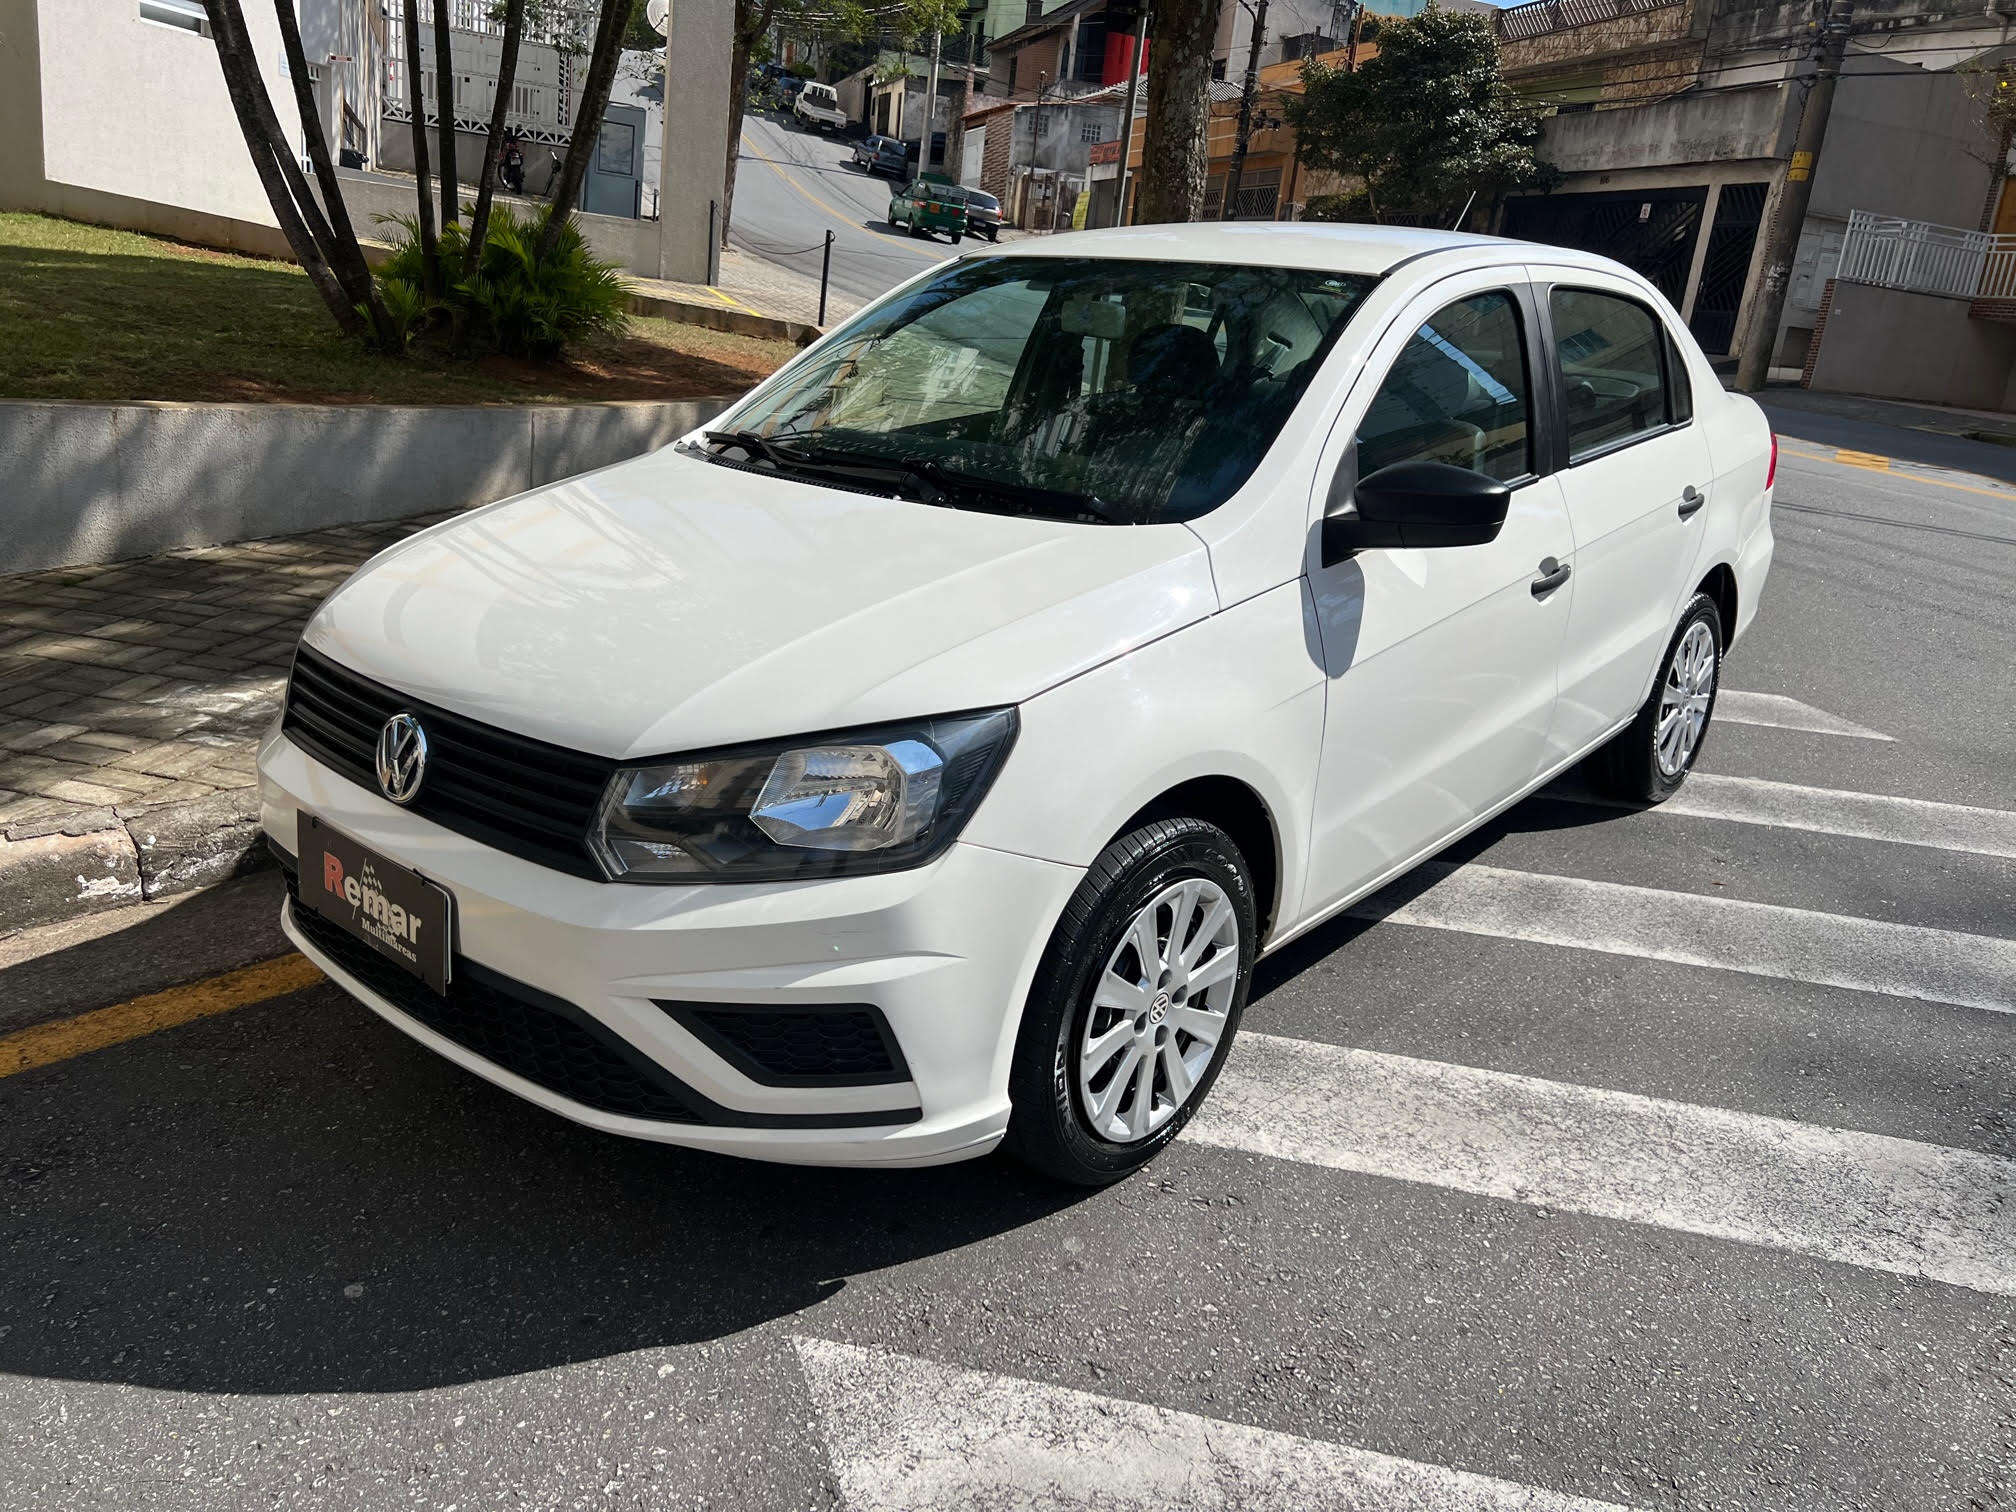 Volkswagen Voyage Branco